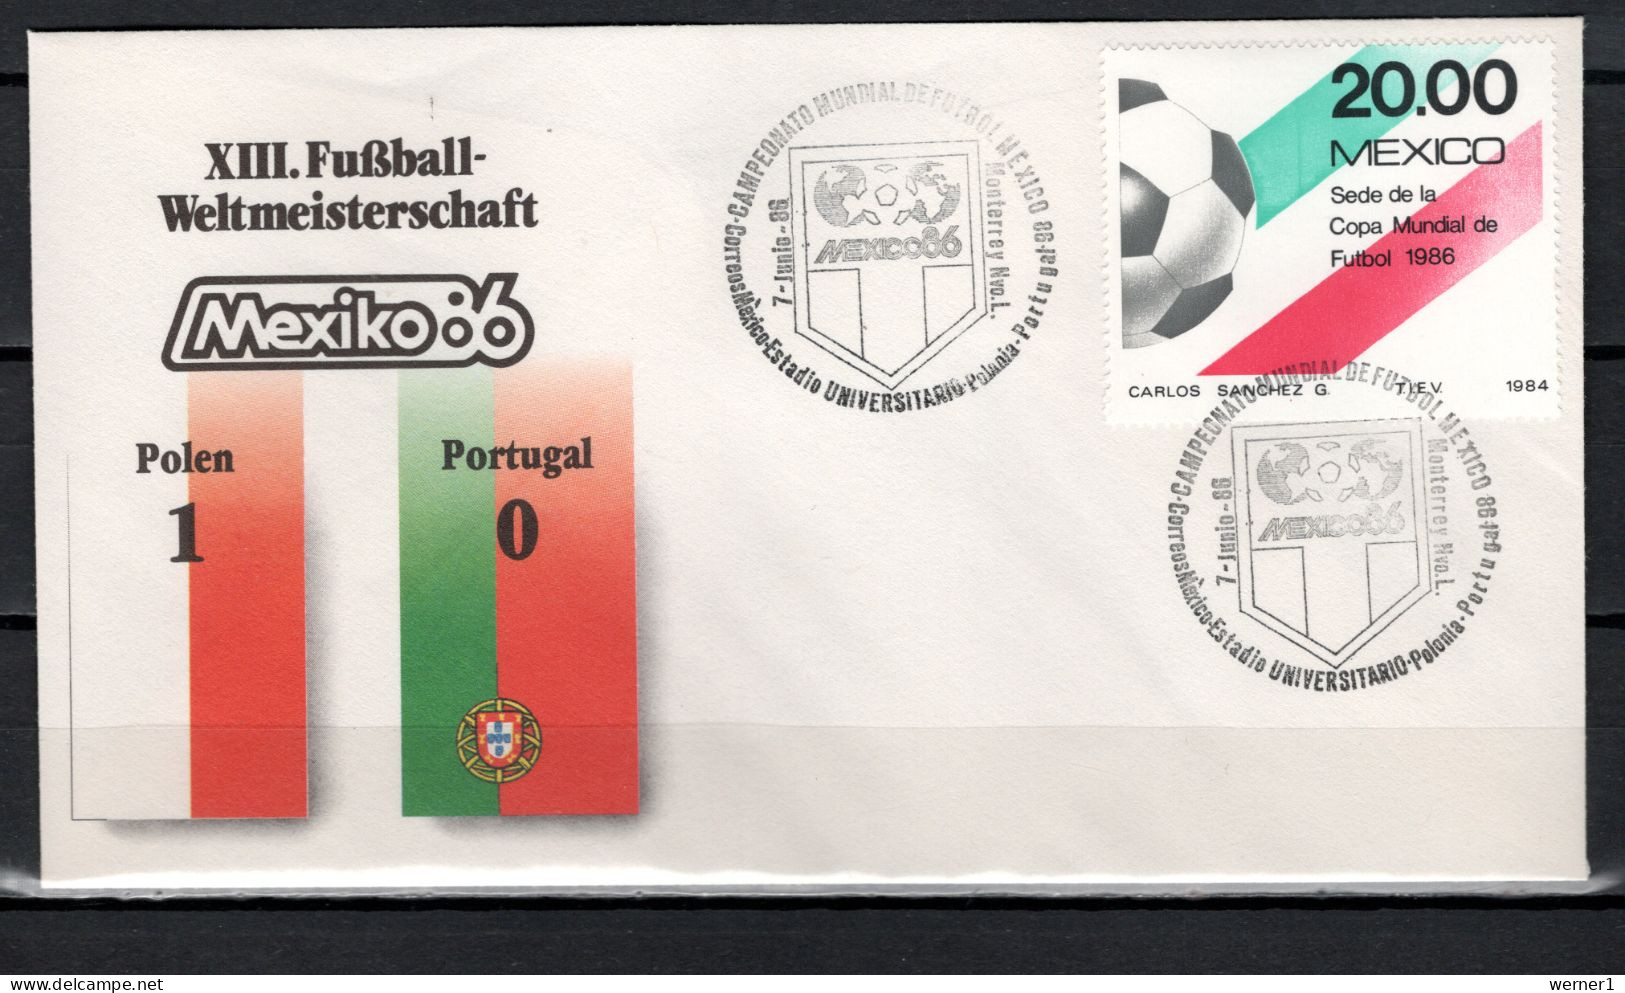 Mexico 1986 Football Soccer World Cup Commemorative Cover Match Poland - Portugal 1 : 0 - 1986 – Mexico